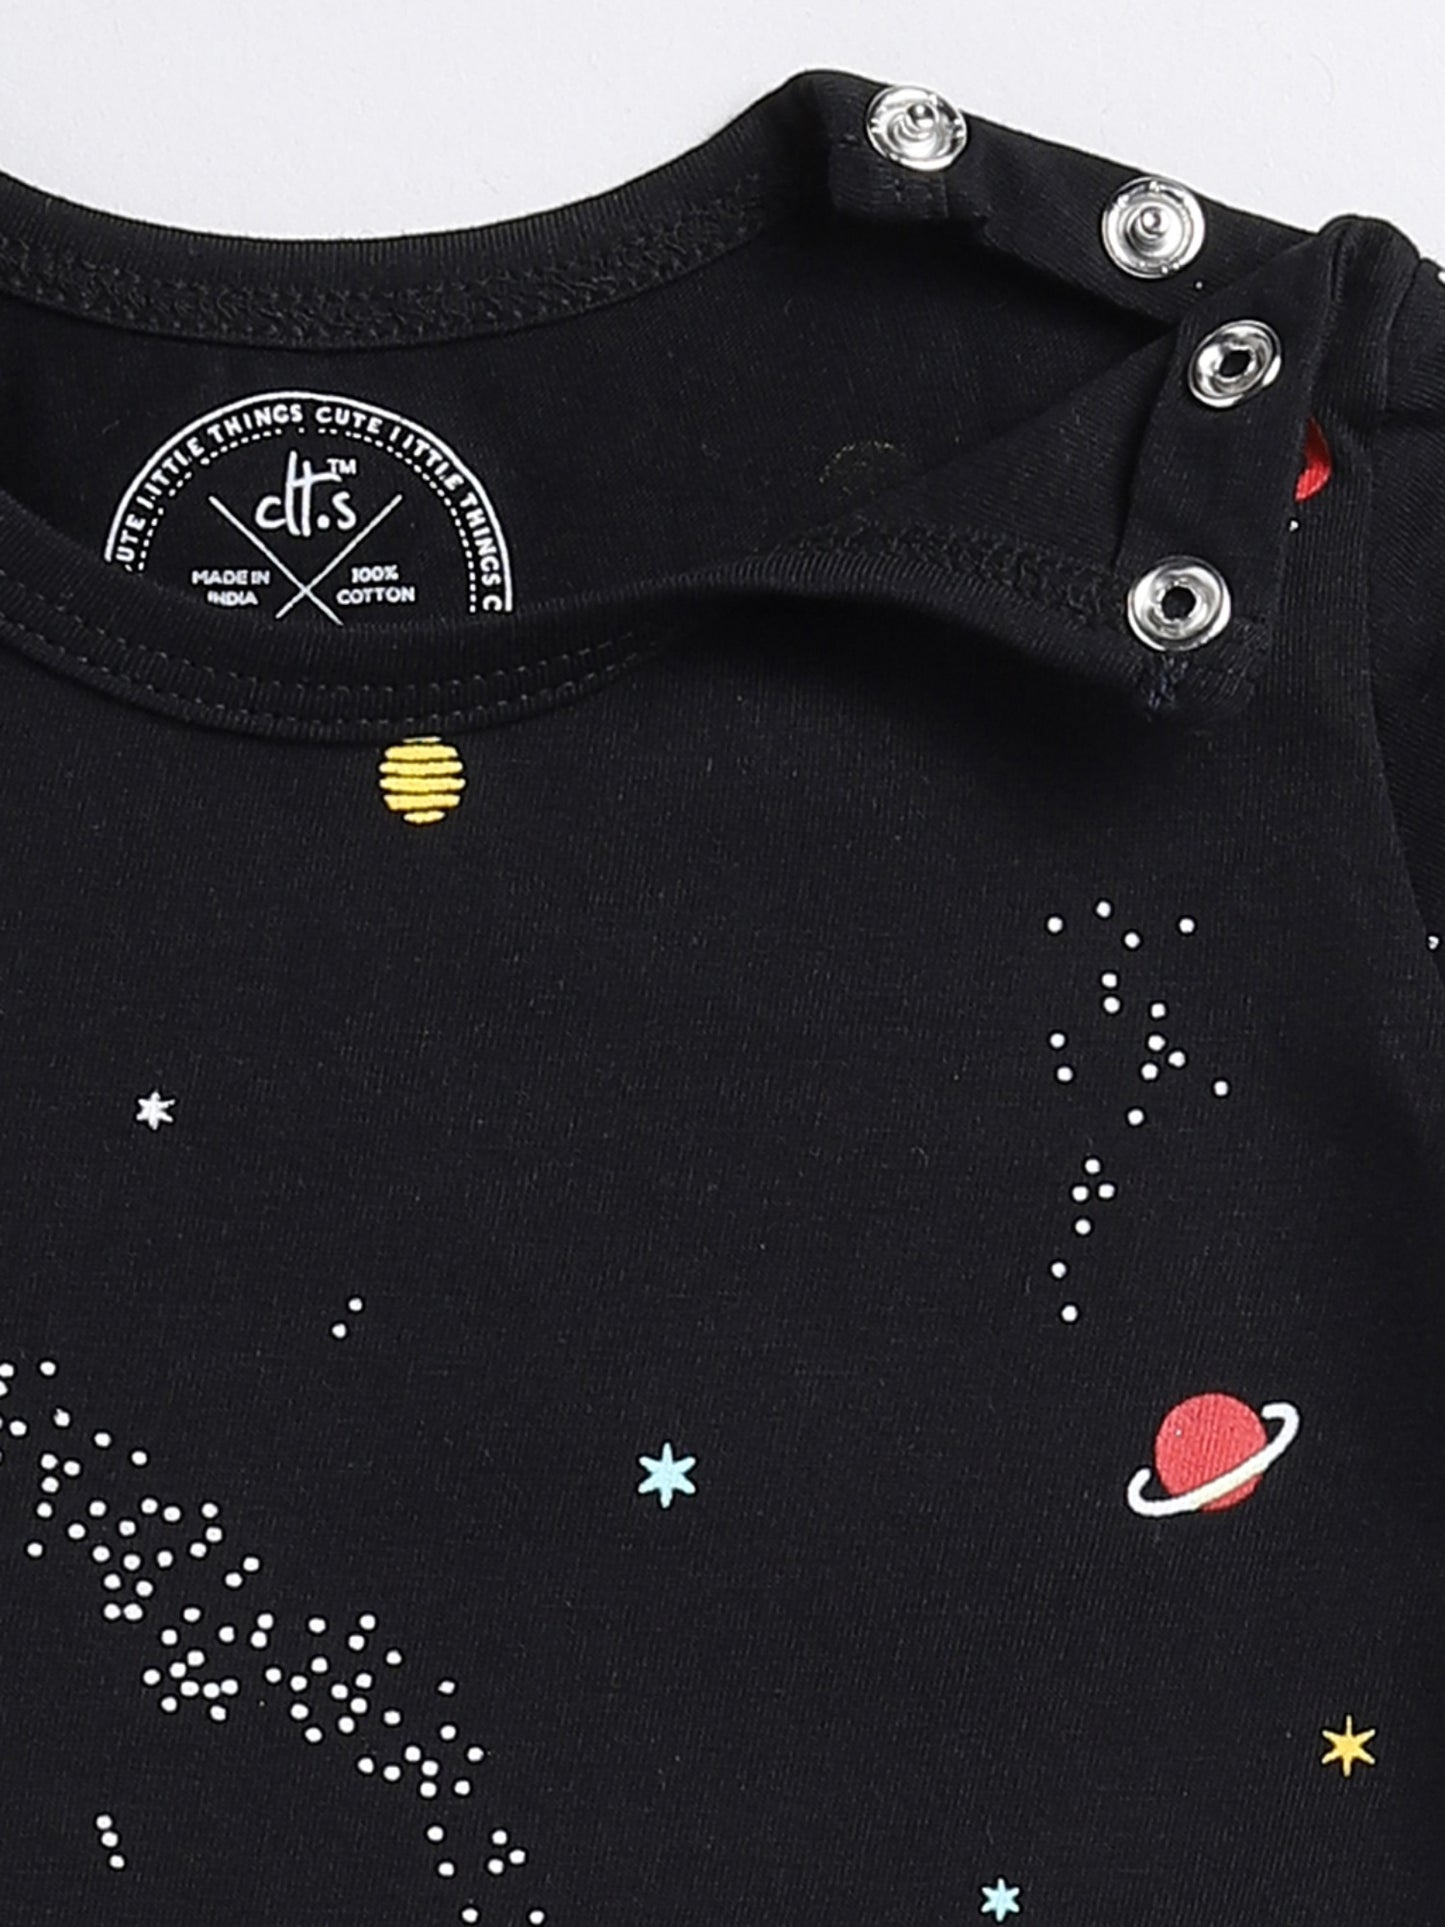 Space Theme Black Cotton Full Sleeve Nightwear Set